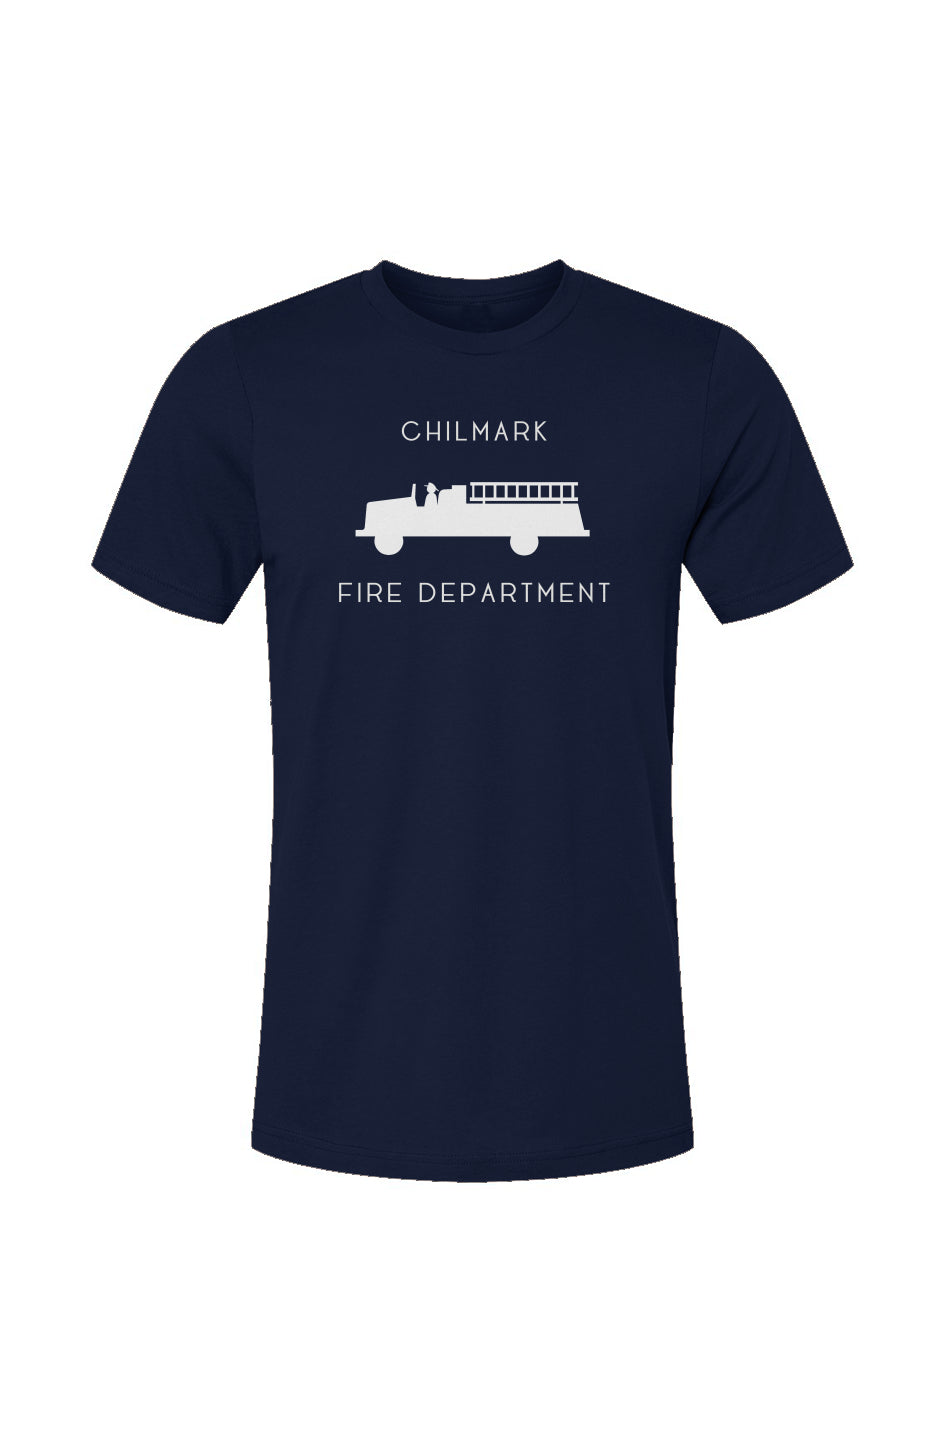 Chilmark Fire Department Unisex Tee